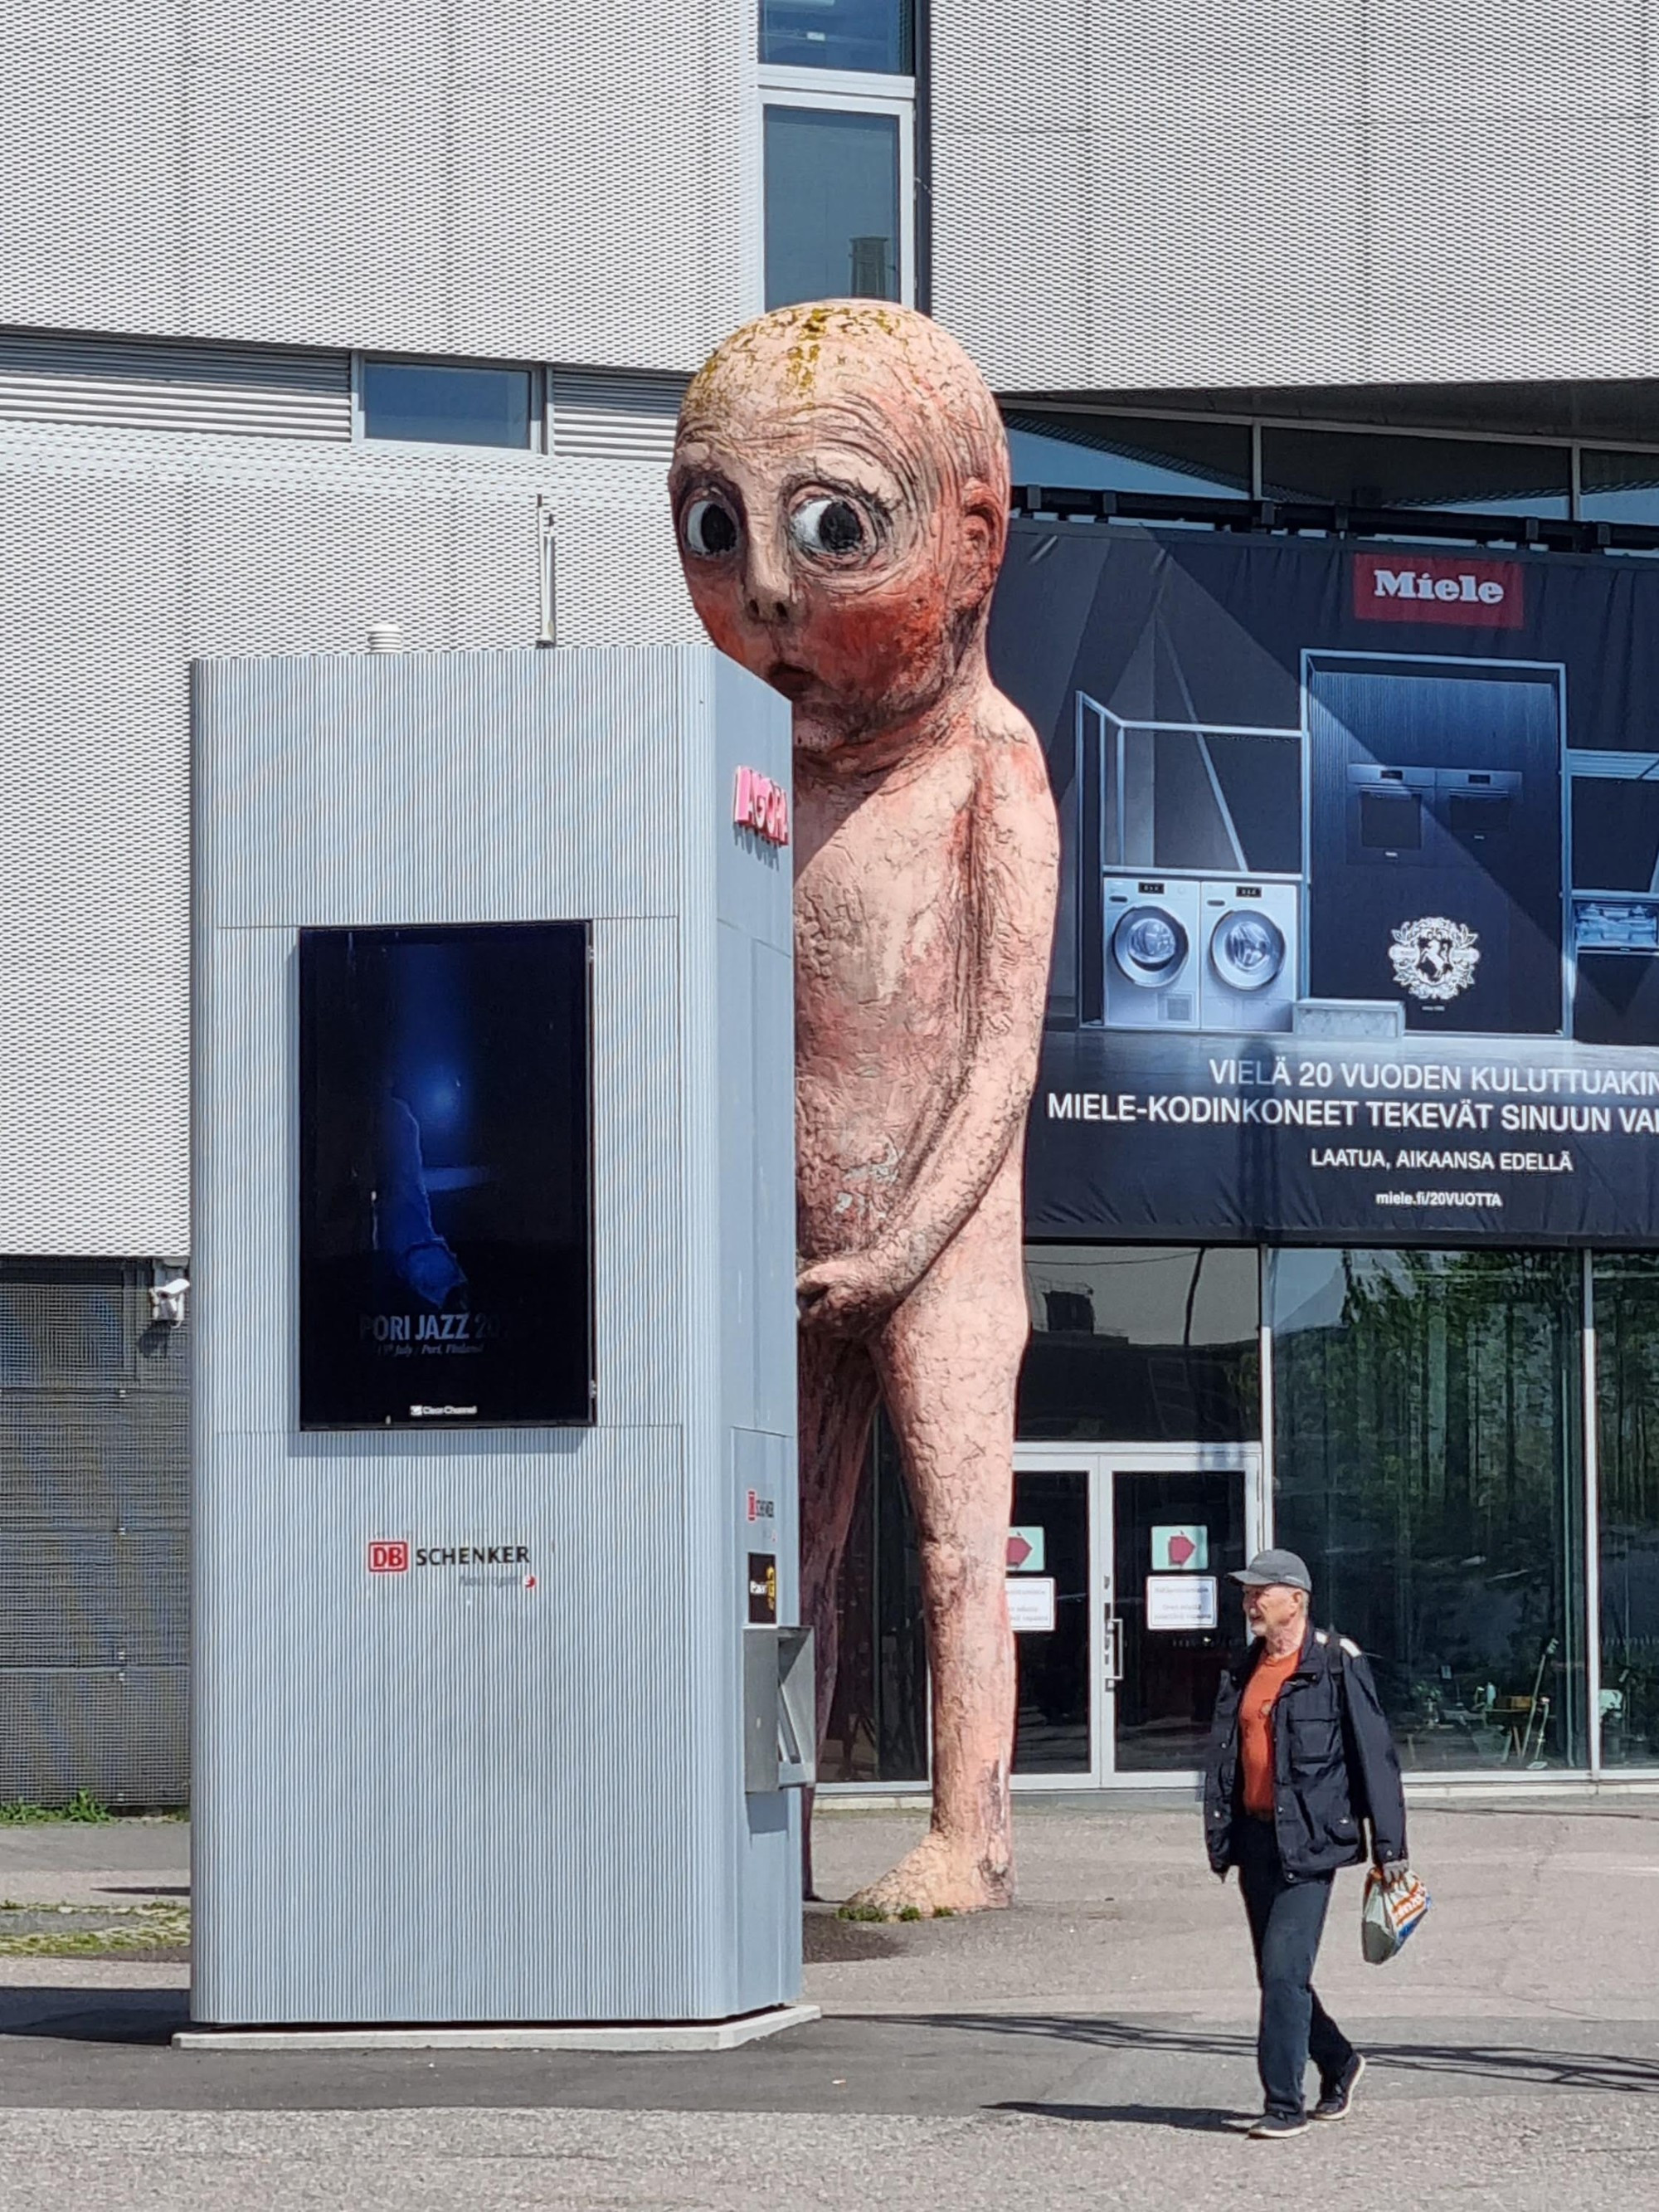 Statue of peeing man, Finland